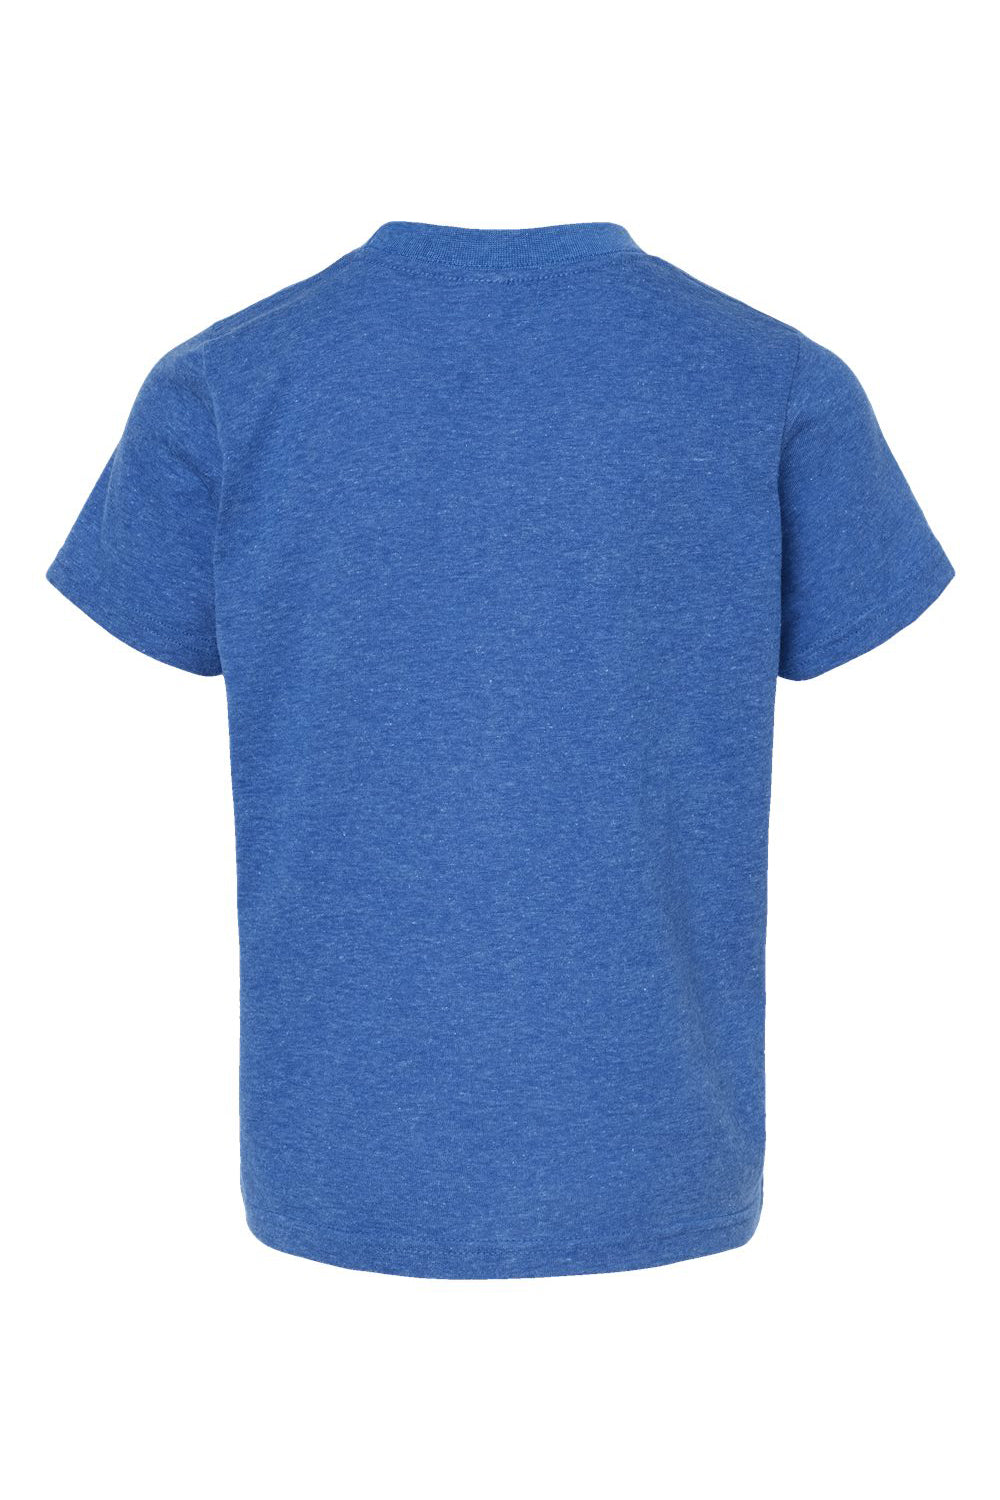 Tultex 265 Youth Poly-Rich Short Sleeve Crewneck T-Shirt Heather Royal Blue Flat Back